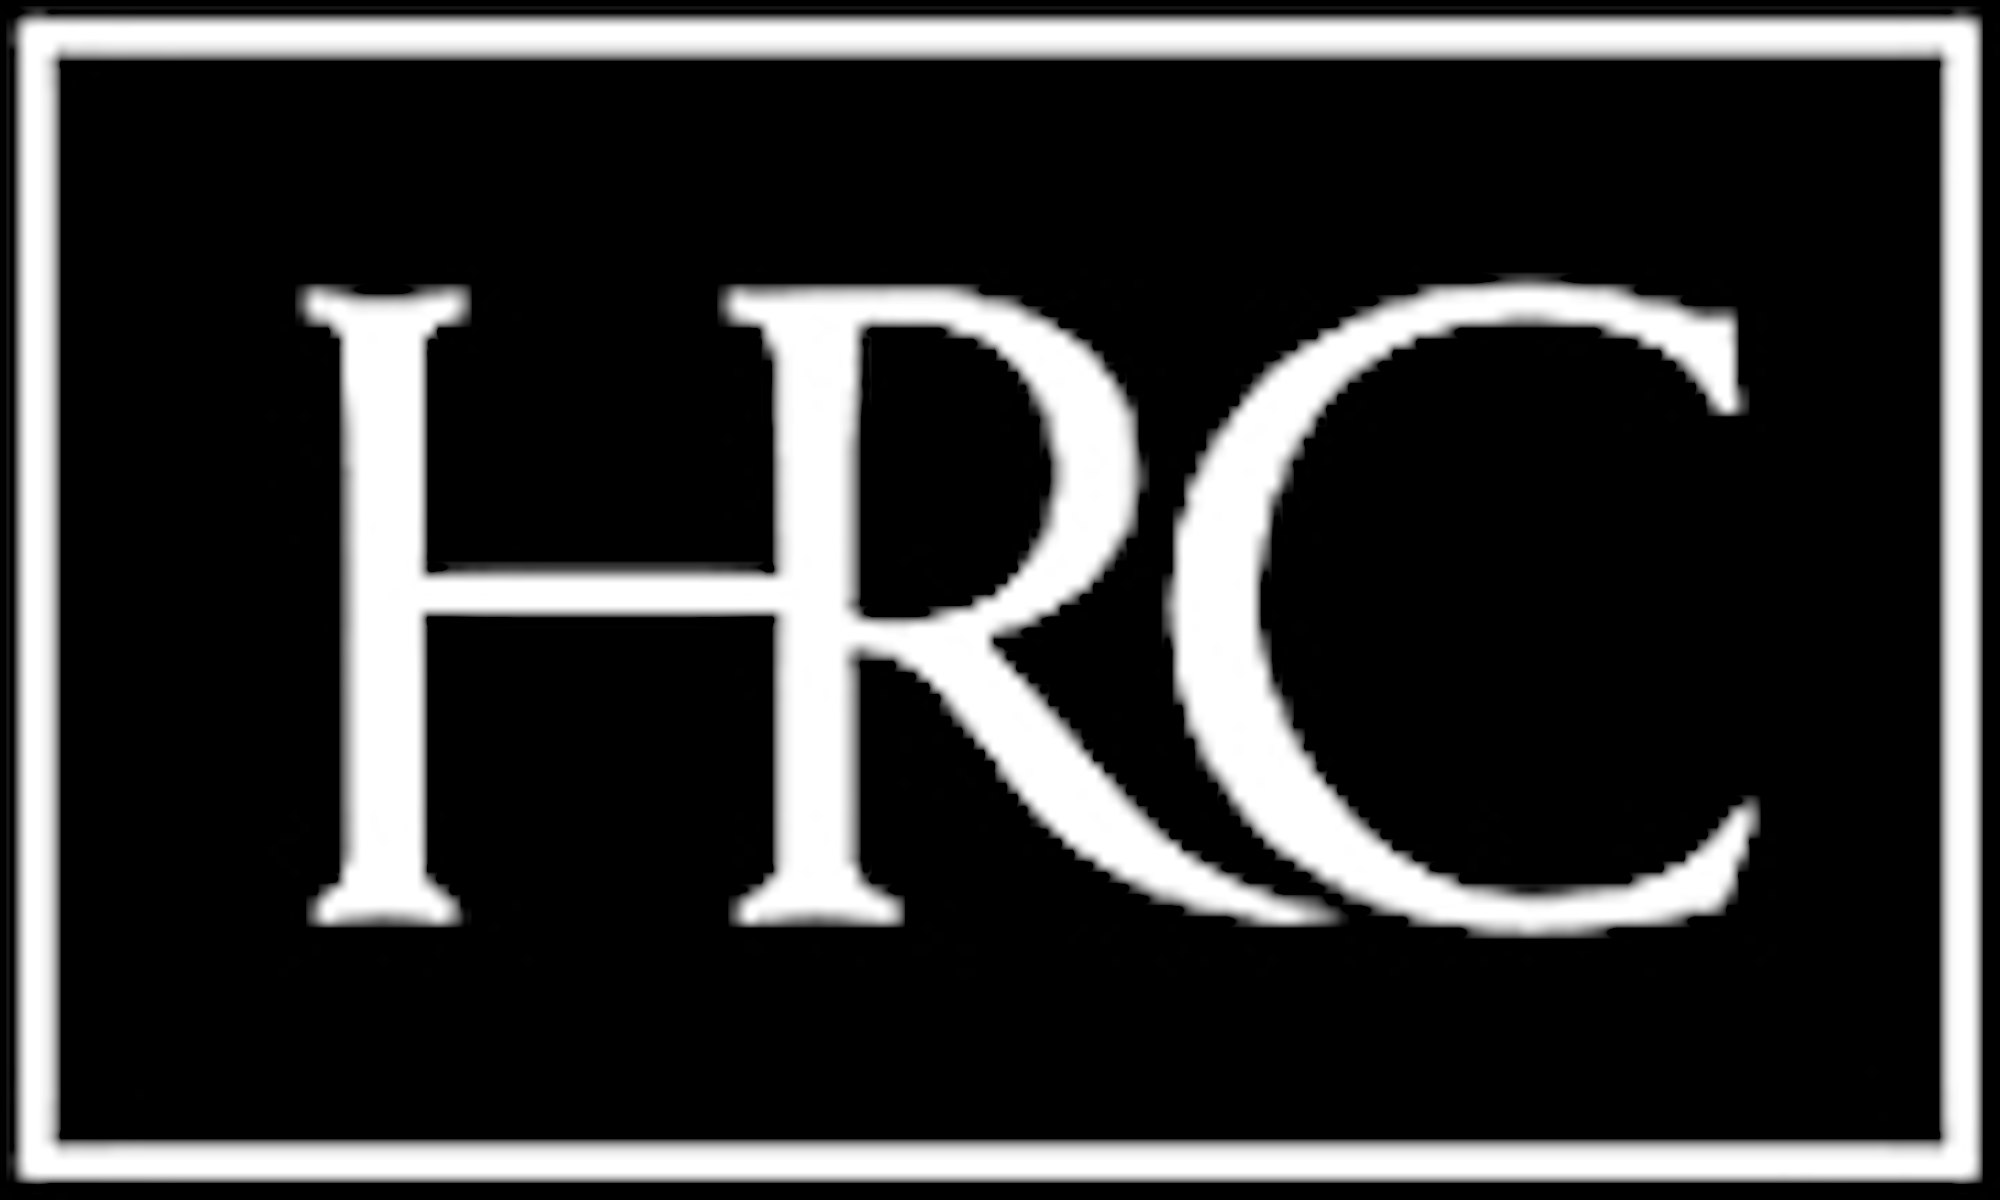 Harry Ransom Center logo